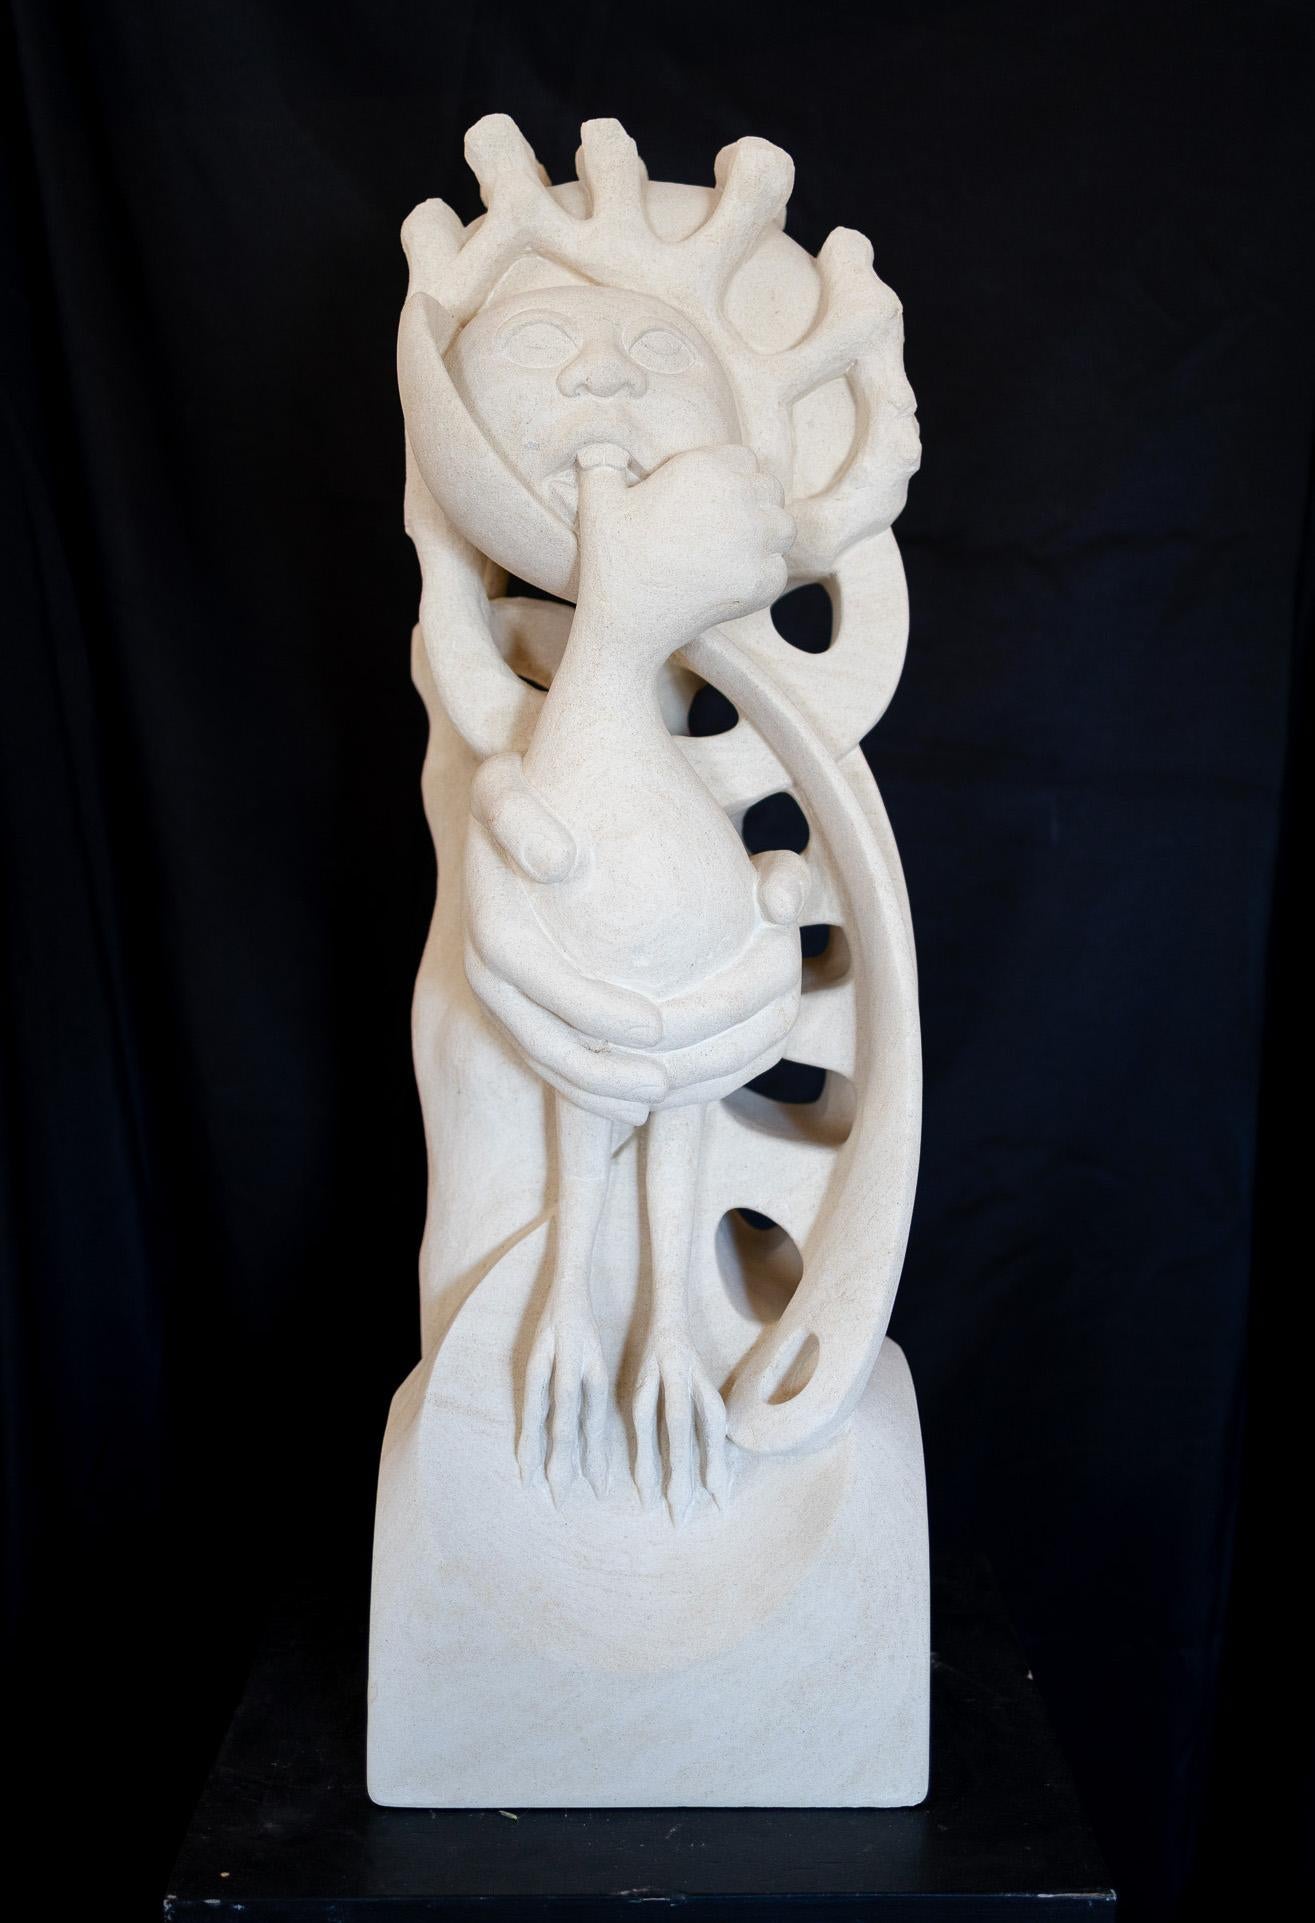 Bob Ragan Figurative Sculpture - "Thumb Sucker" Psychedelic Fantasy Sculpture in White Carved Stone 